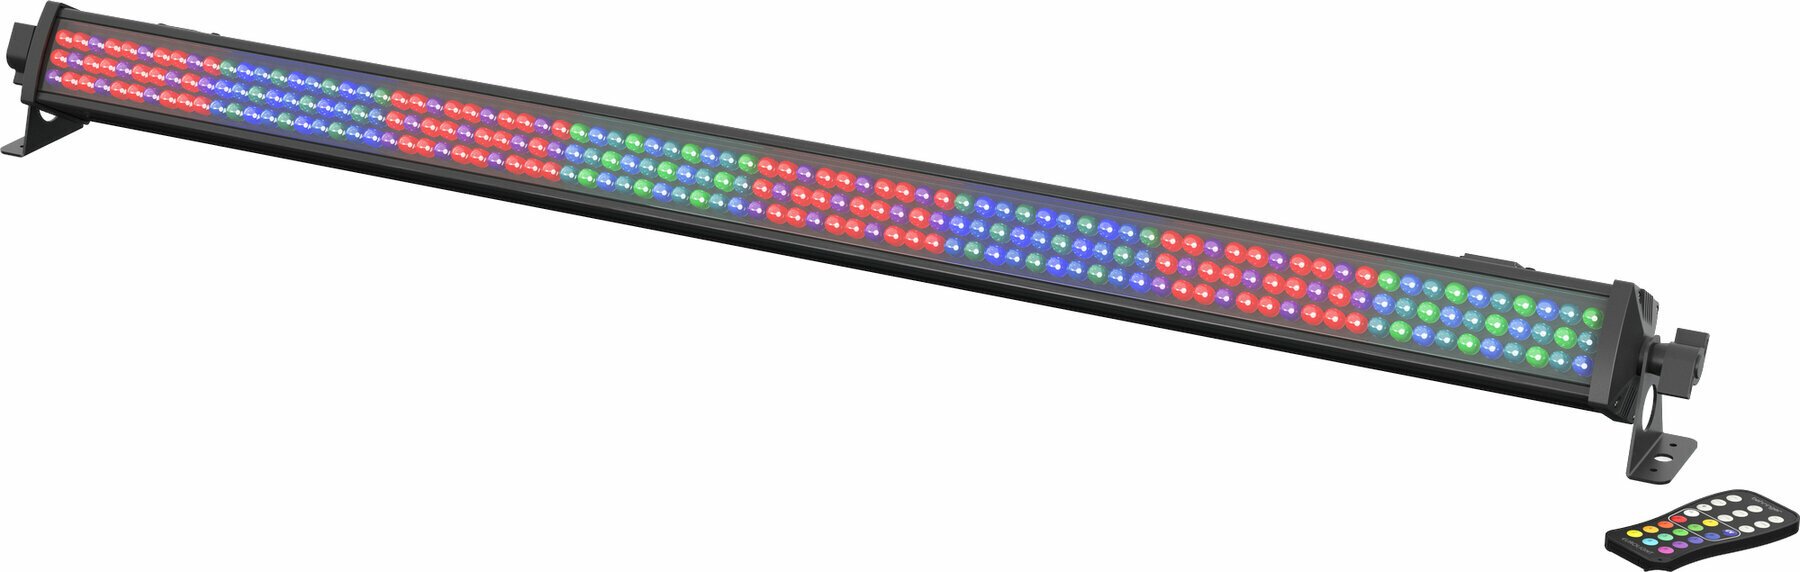 LED Bar Behringer Led Floodlight BAR 240-8 RGB-R LED Bar